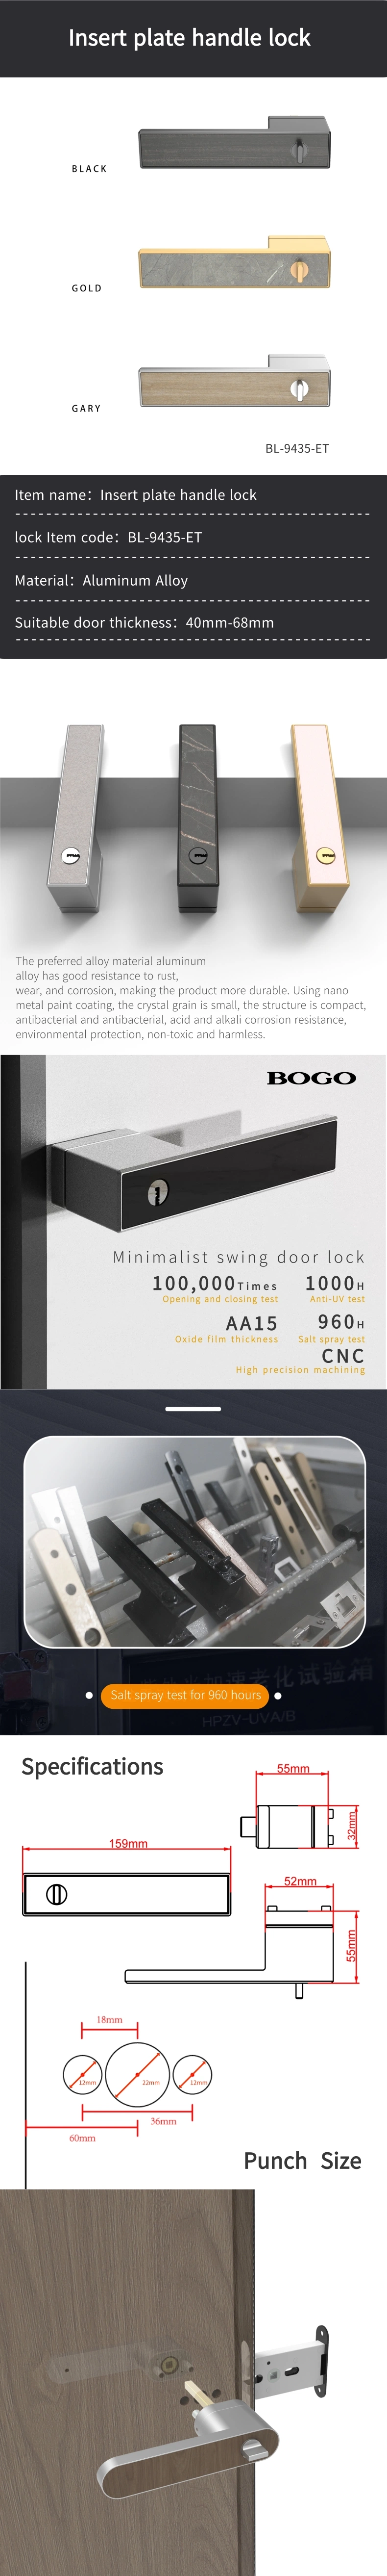 Lockey 115-P Keyless Mechanical Digital Panic Bar Exit Door Lock